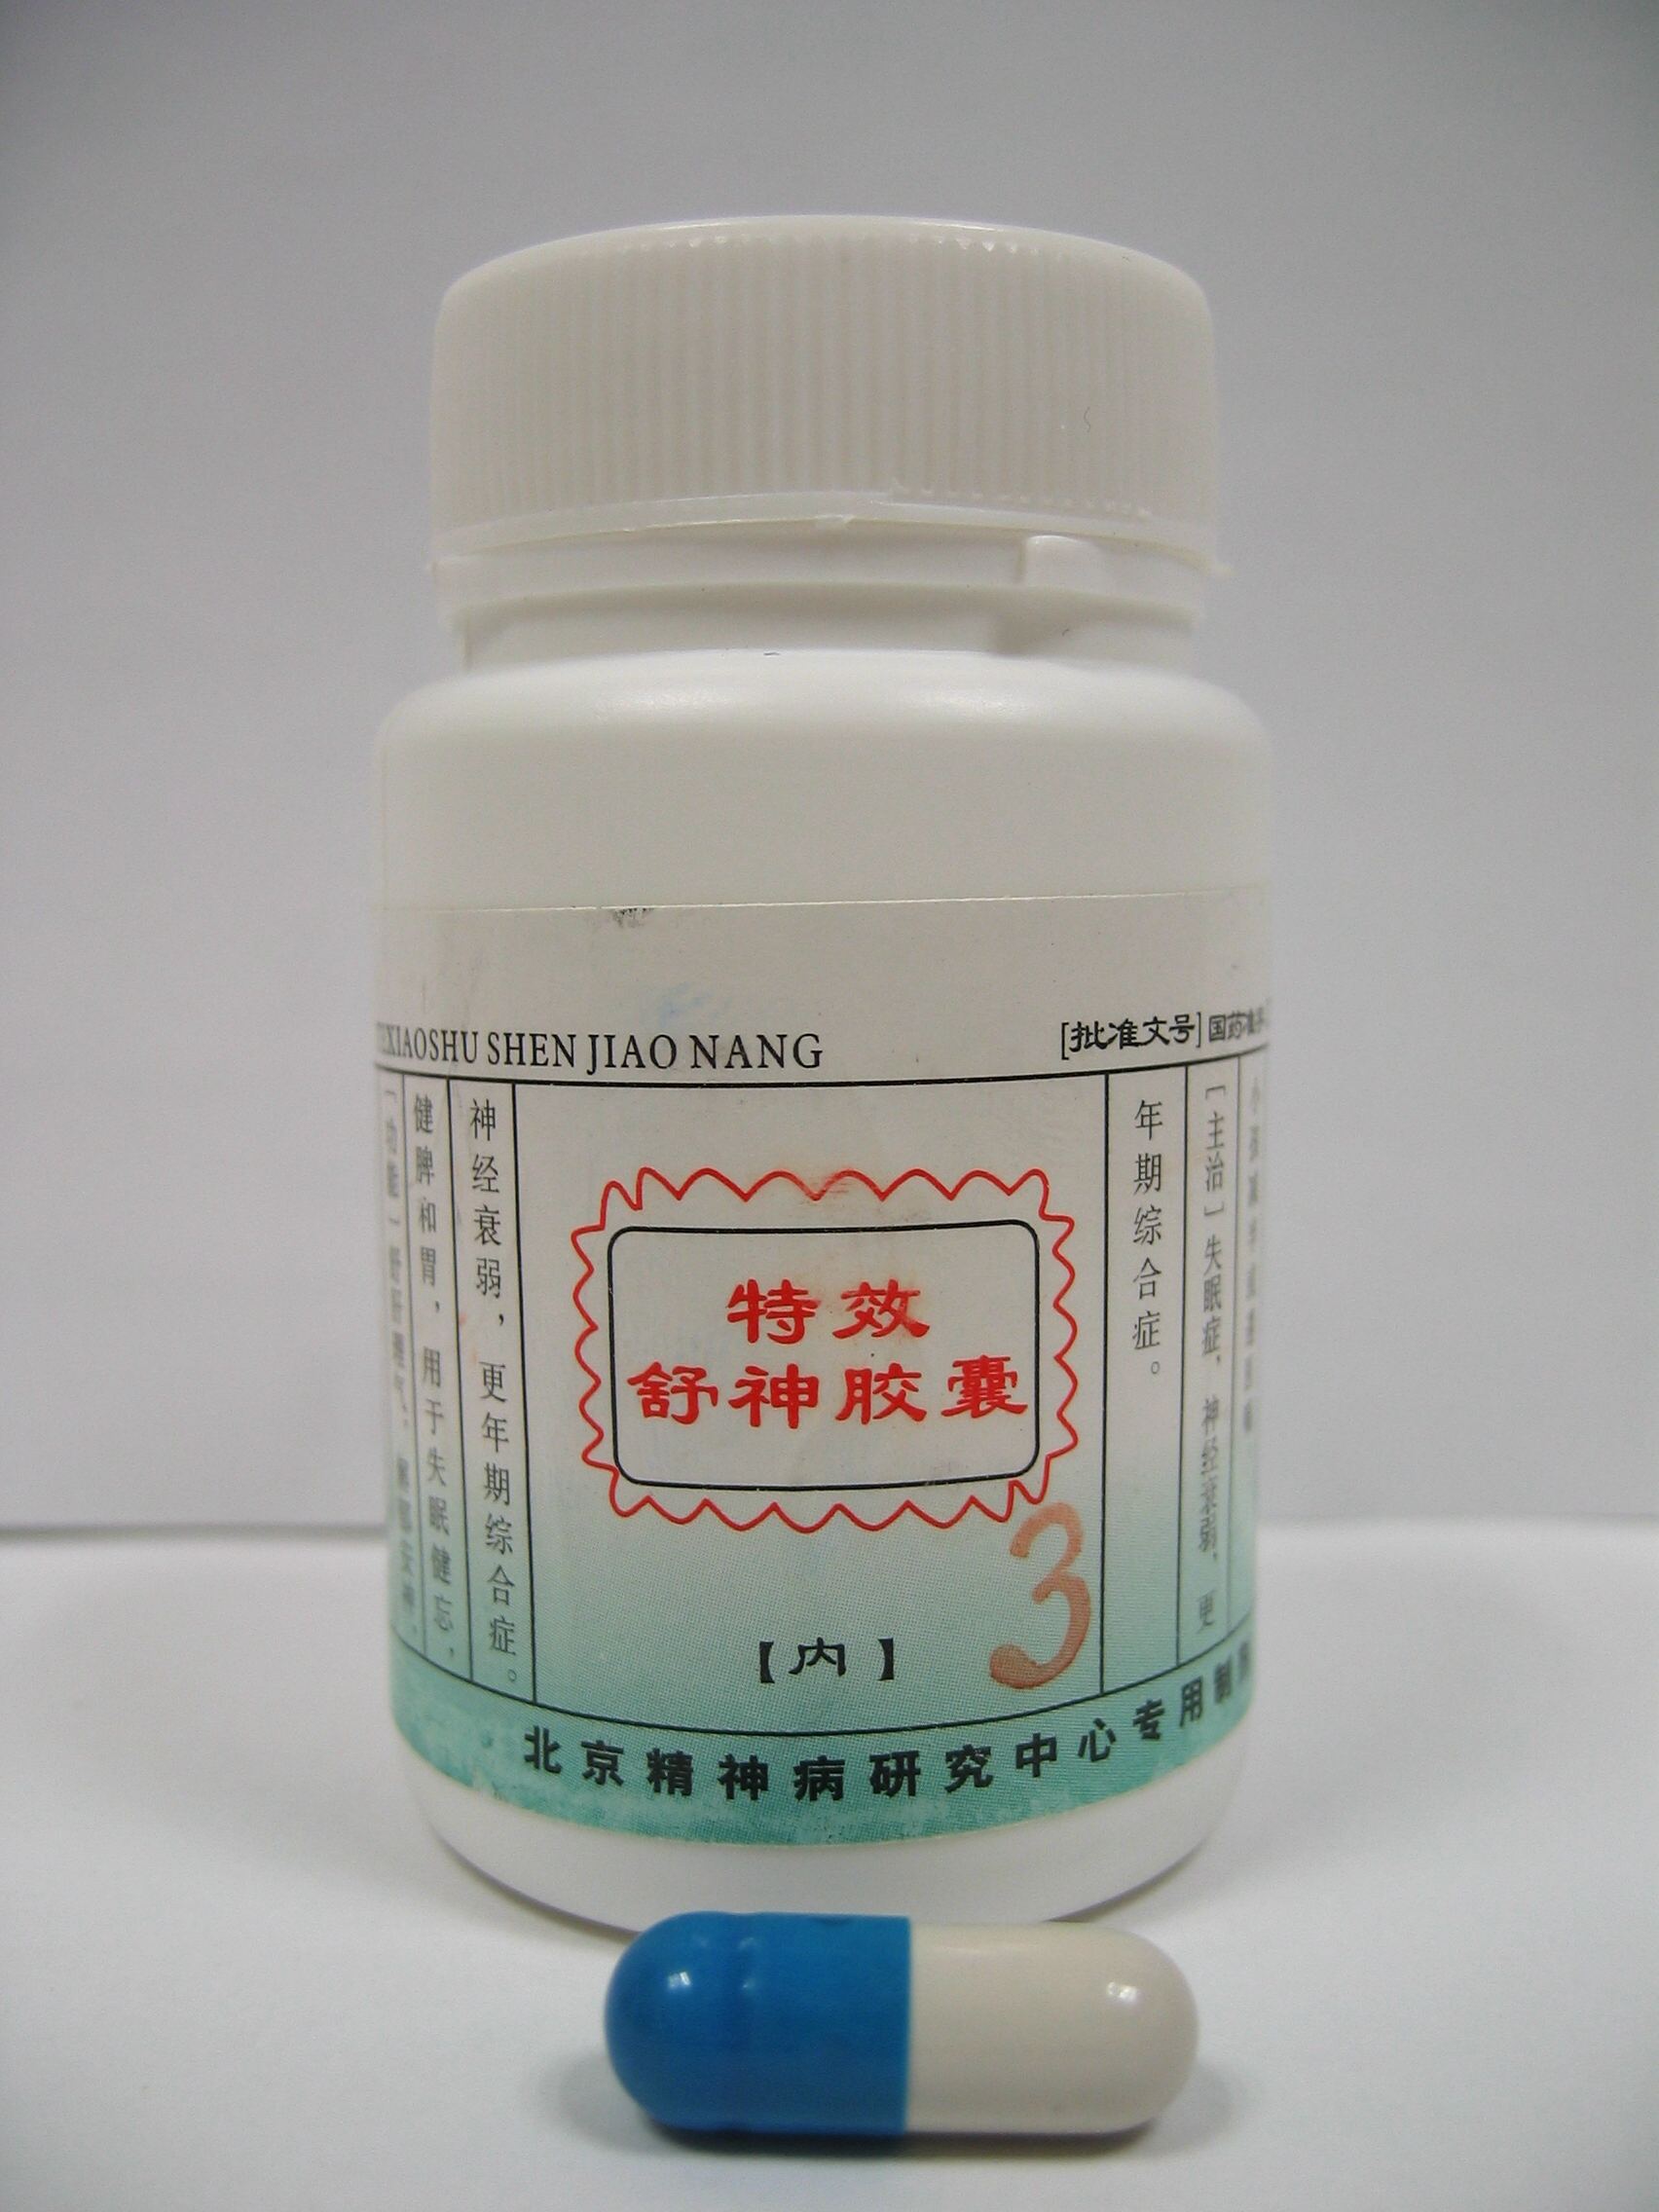 Proprietary Chinese medicine containing diazepam and chlorpromazine